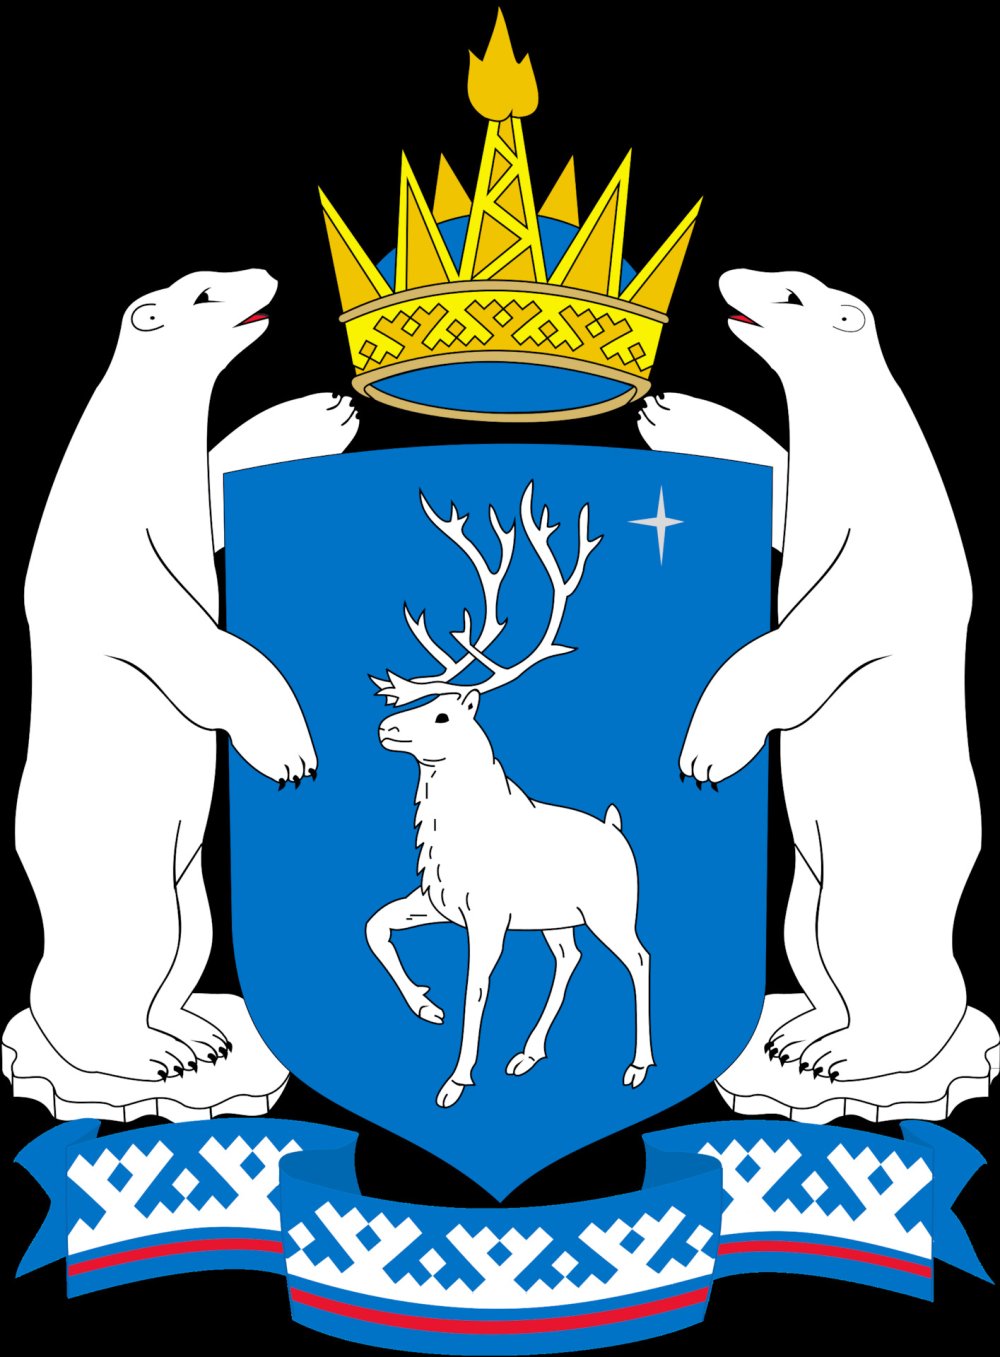 Флаг и герб Ямало-Ненецкого автономного округа